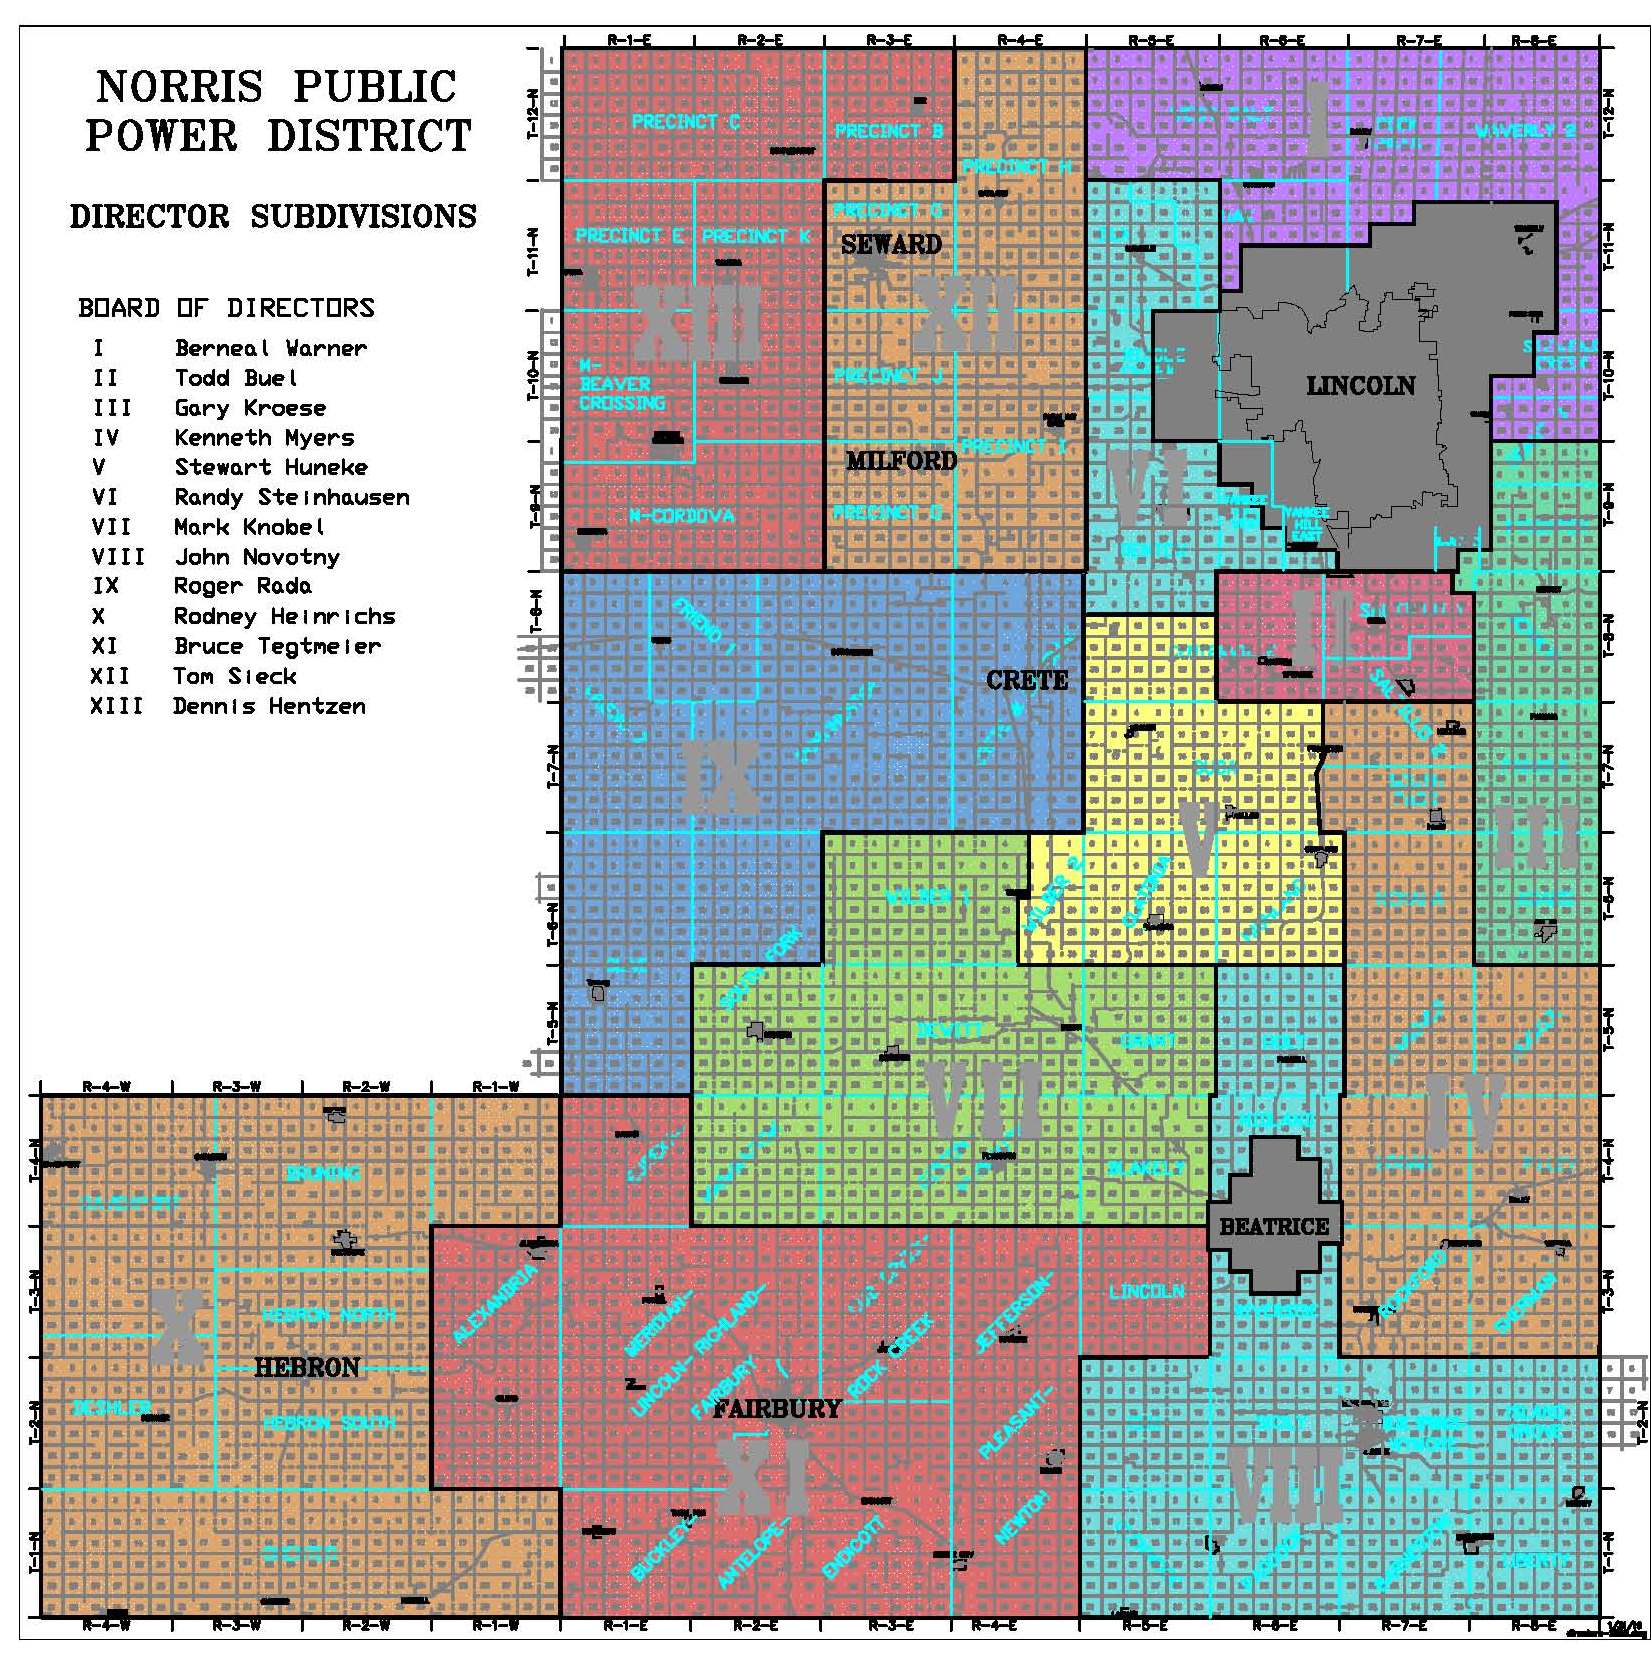 District Subdivisions